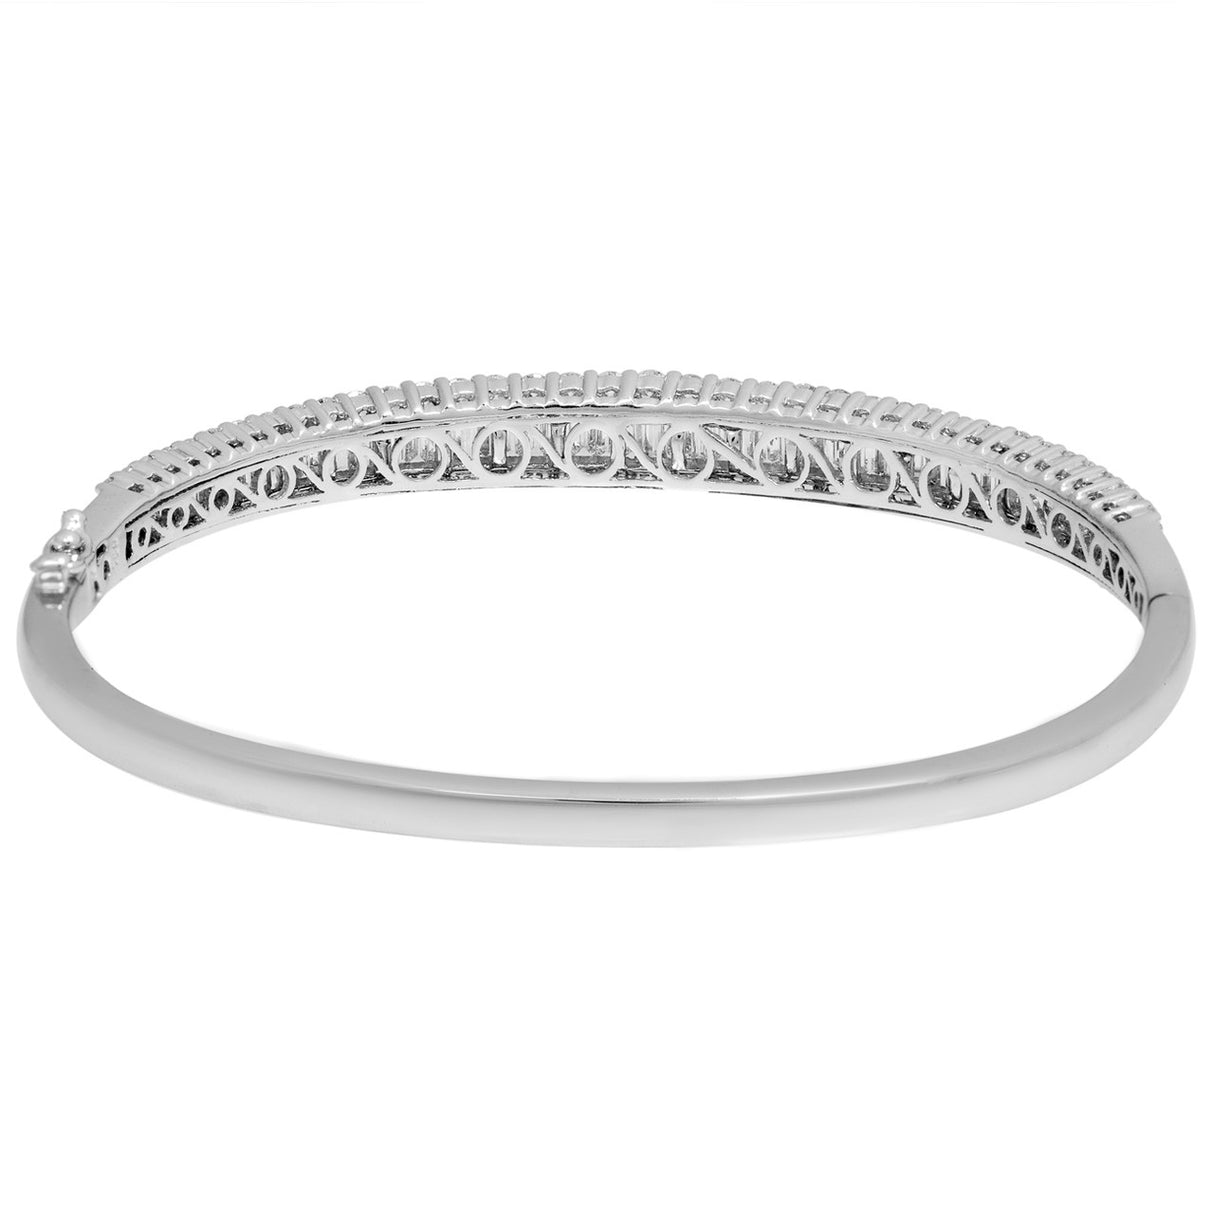 18K White Gold 3.73 Carat Diamond Tapered Bracelet